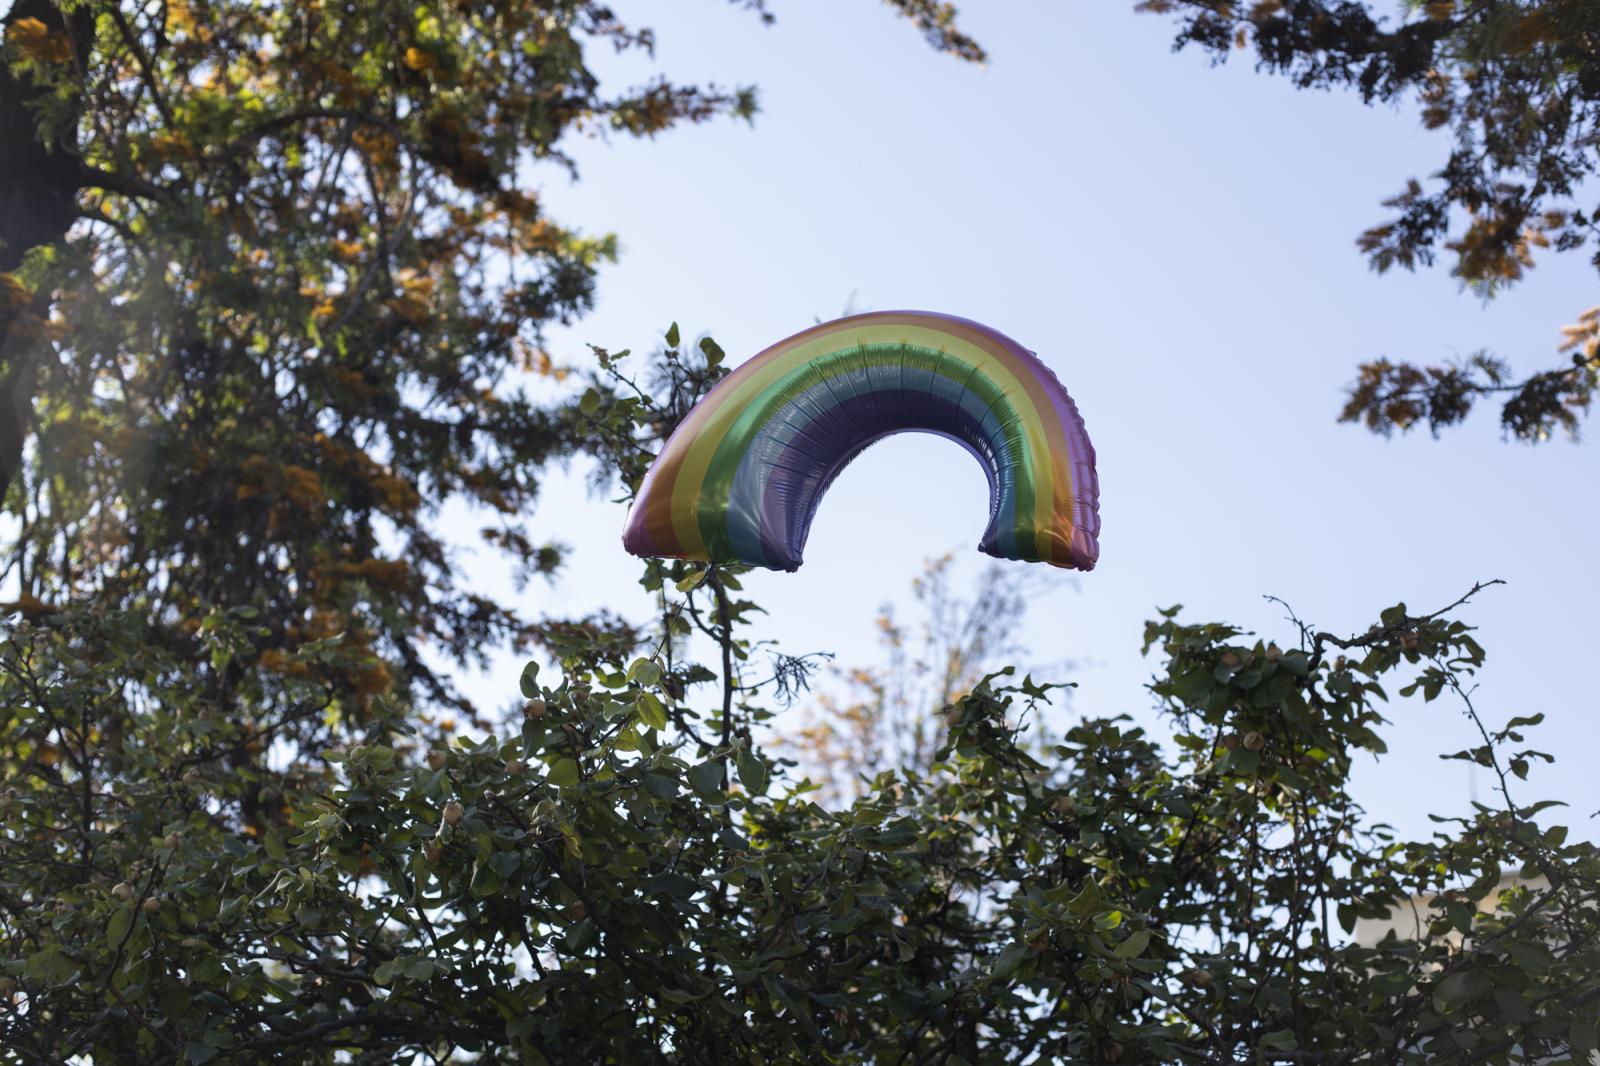 Orgullo - Un globo con forma de arco iris en la avenida Libertador...